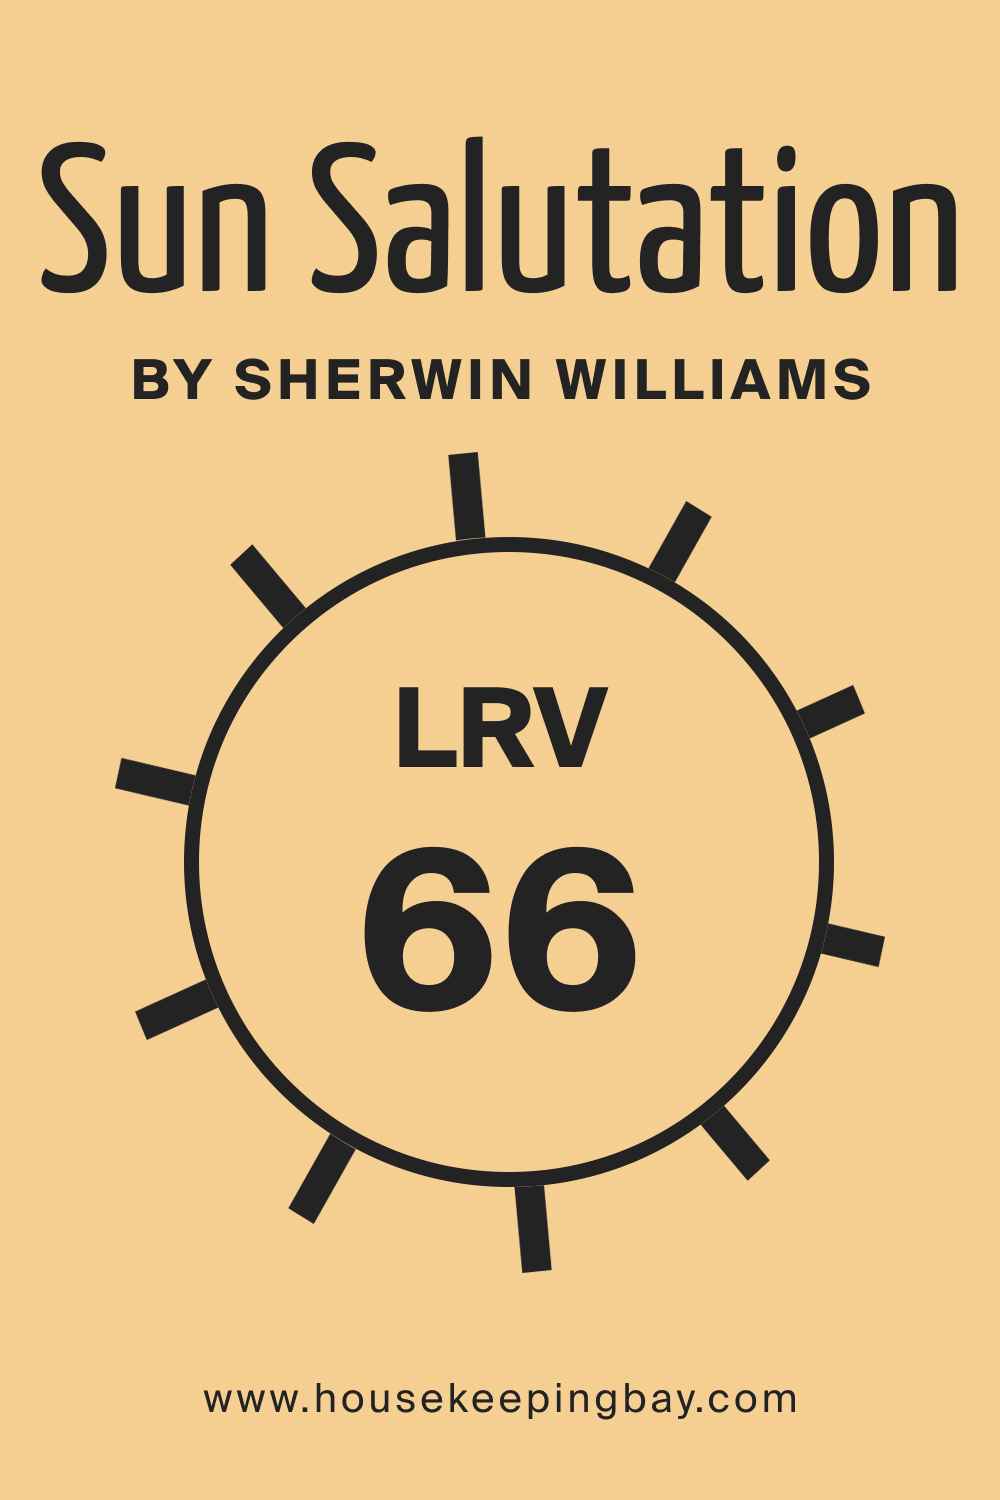 Sun Salutation SW 9664 by Sherwin Williams. LRV 66